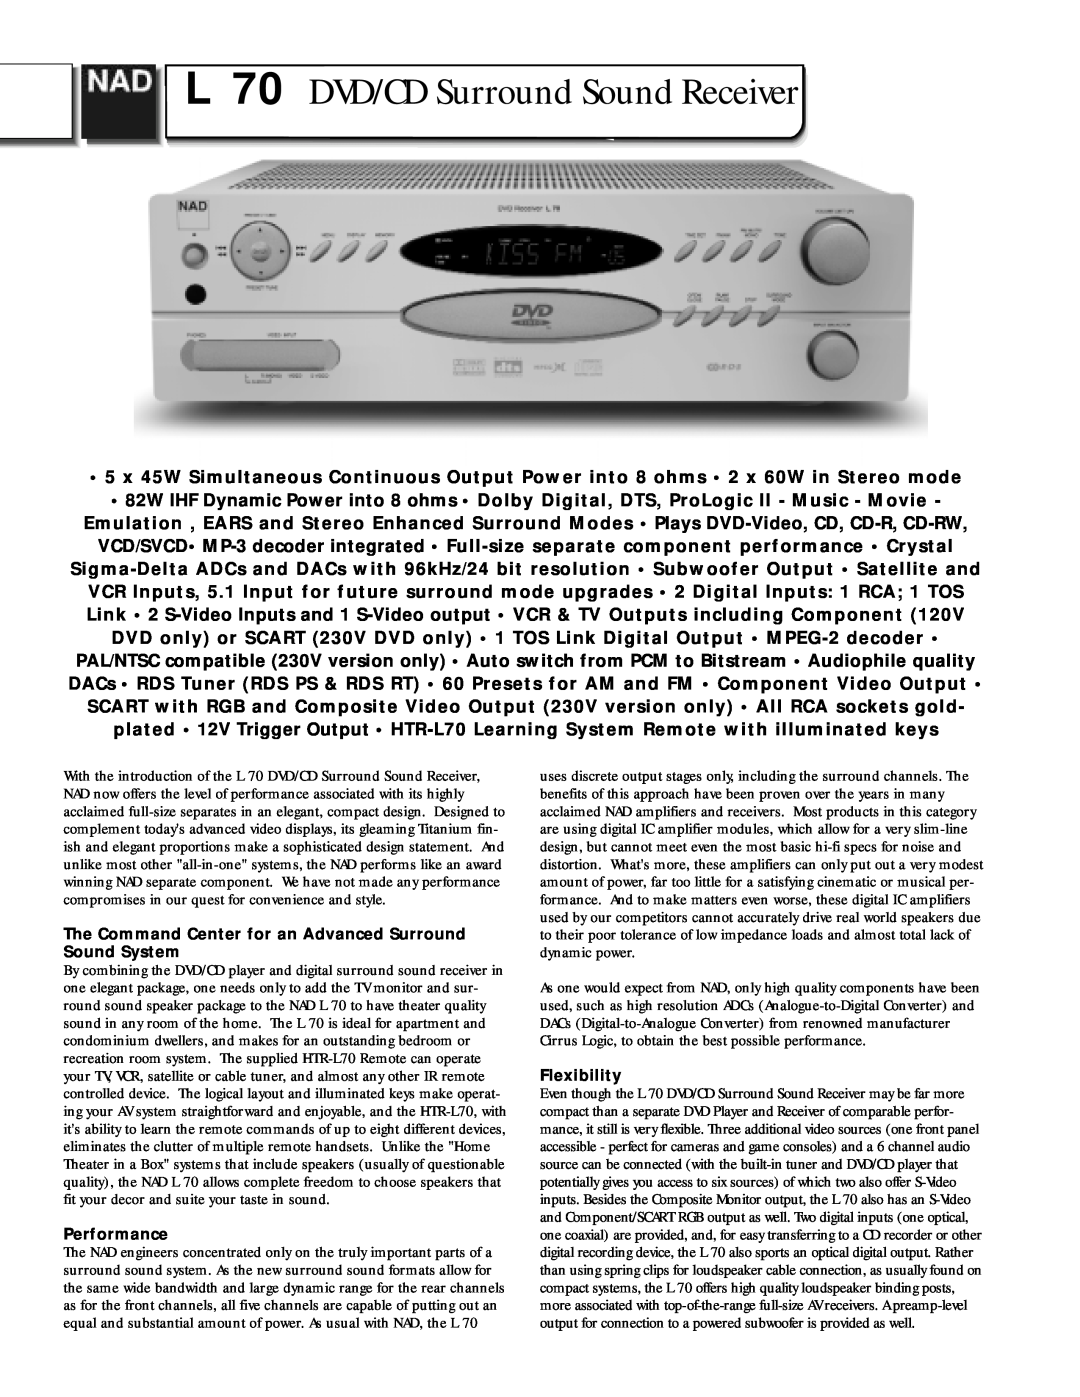 NAD L70 manual L 70 DVD/CD Surround Sound Receiver, Performance, Flexibility 